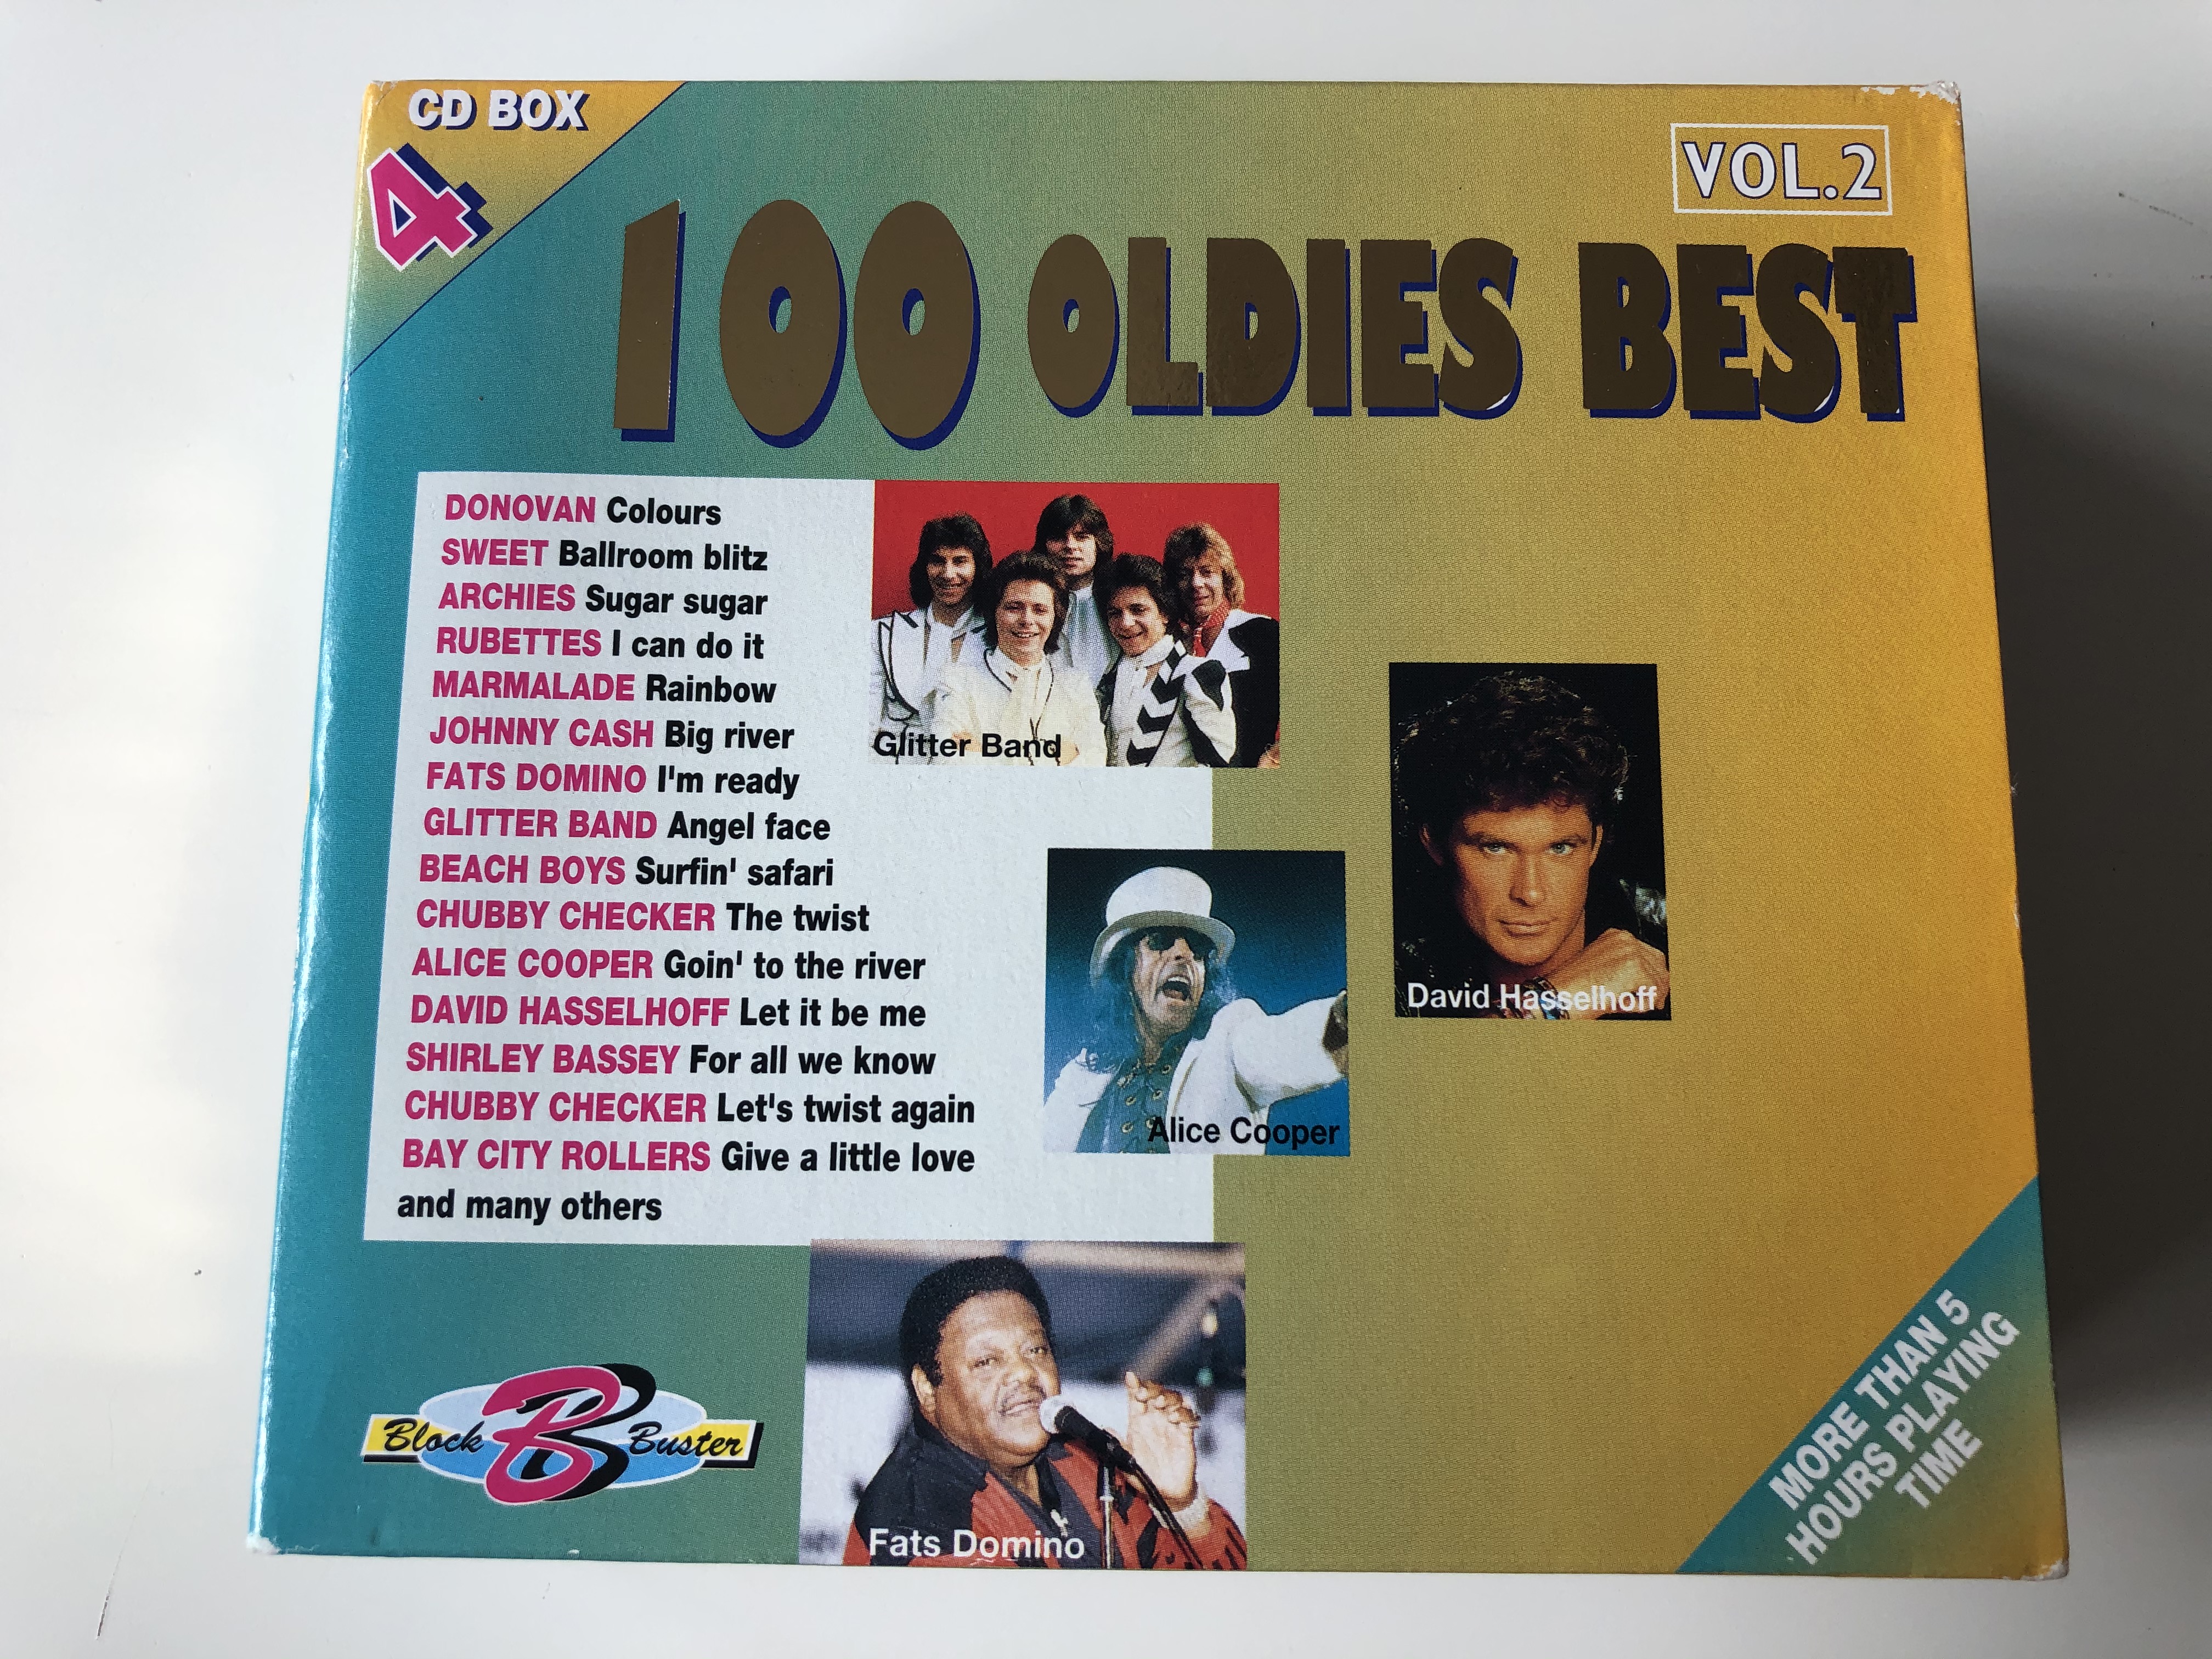 100 Oldies Best - Vol. 2 - CD Box 4 / Donovan - Colours, Sweet - Ballroom  blitz, Archies - Sugar sugar, Rubettes - I Can do it, Marmalade - Rainbow,  Johnny